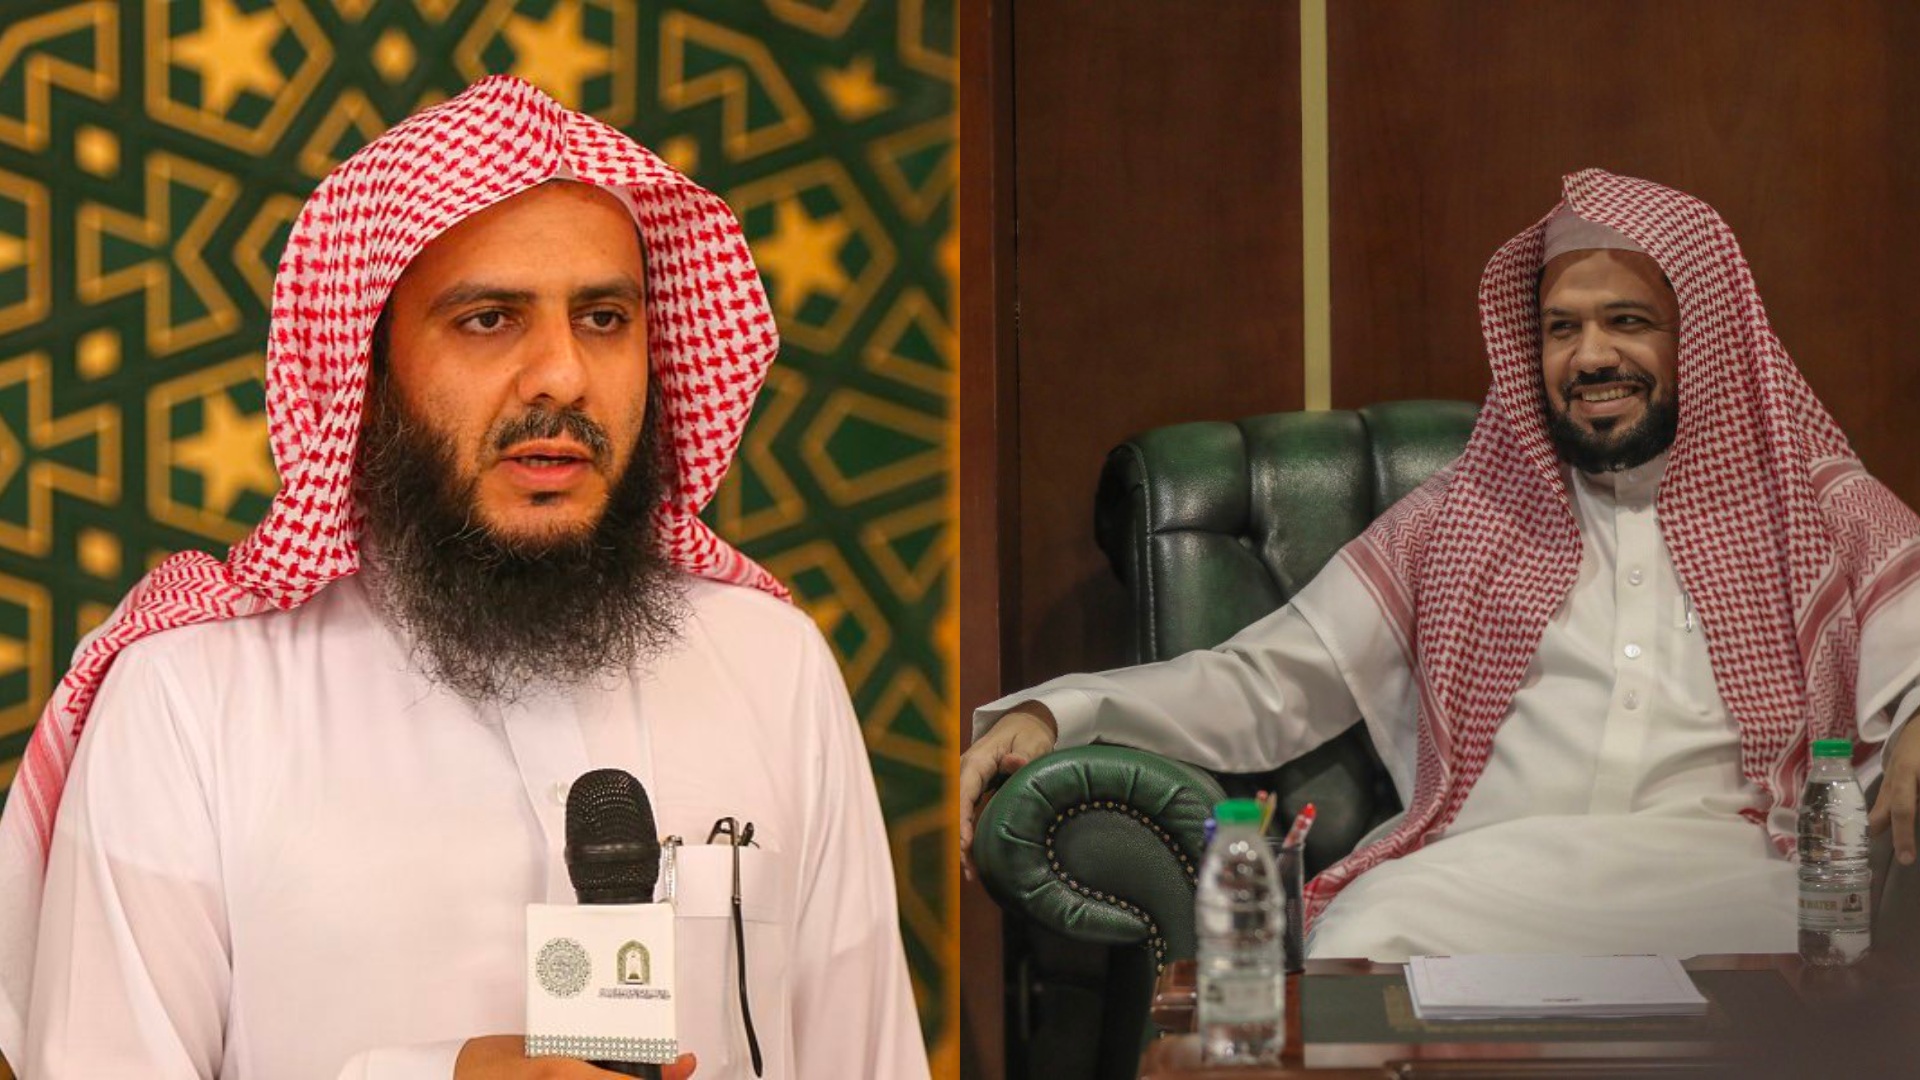 Cheikh Ahmad Hudaify et Cheikh Khalid Muhanna démis de leurs fonctions d'imams de Masjid An Nabawi